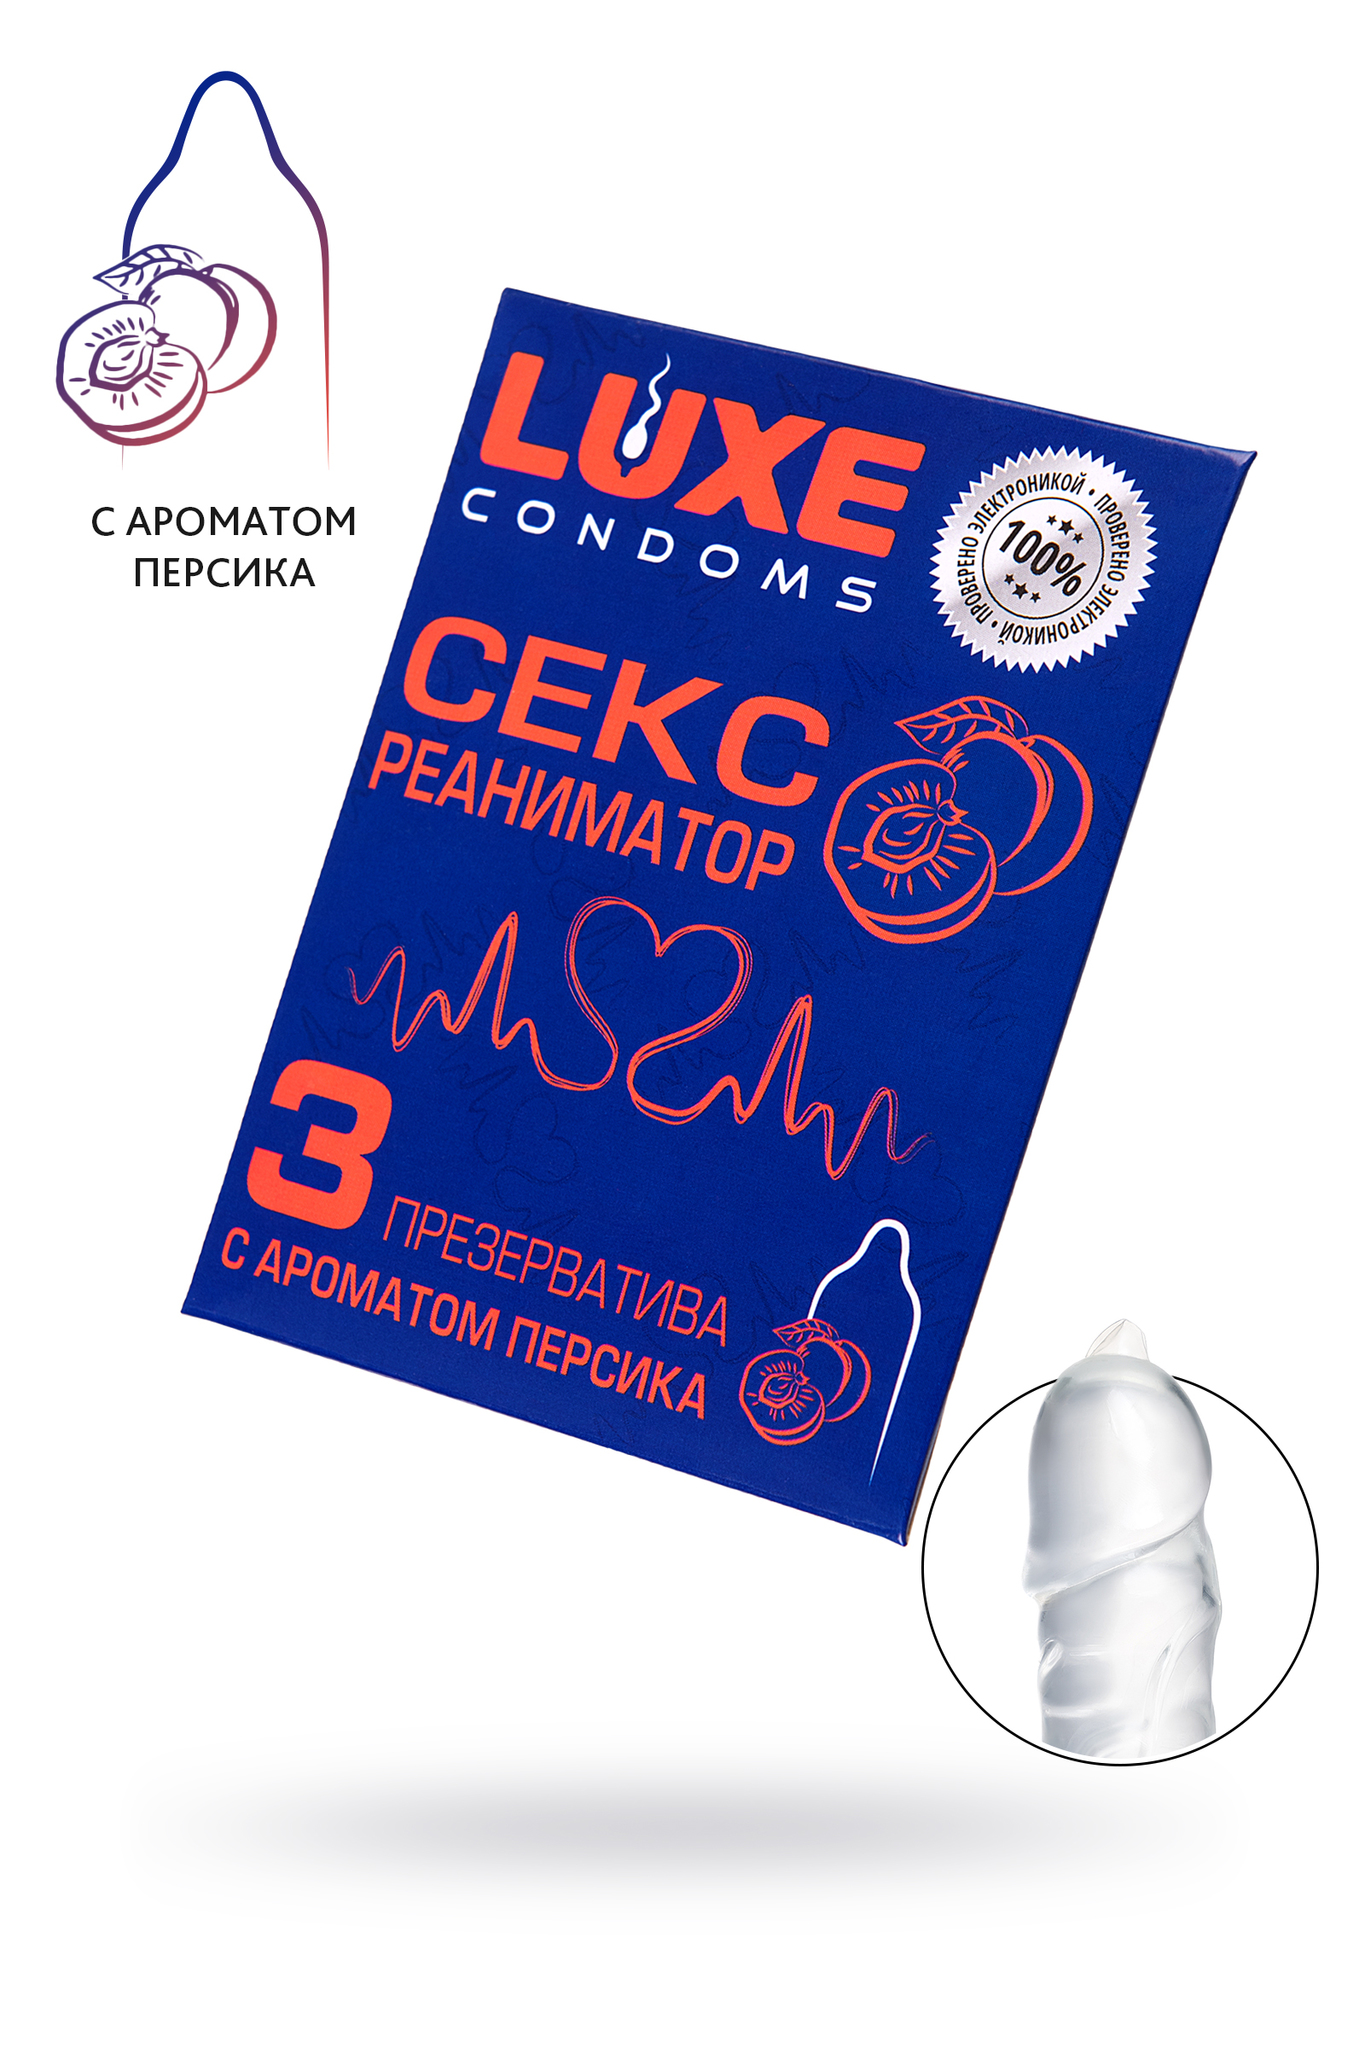 Презервативы Luxe КОНВЕРТ, Сексреаниматор, персик, 18 см., 3 шт. в упаковке фото